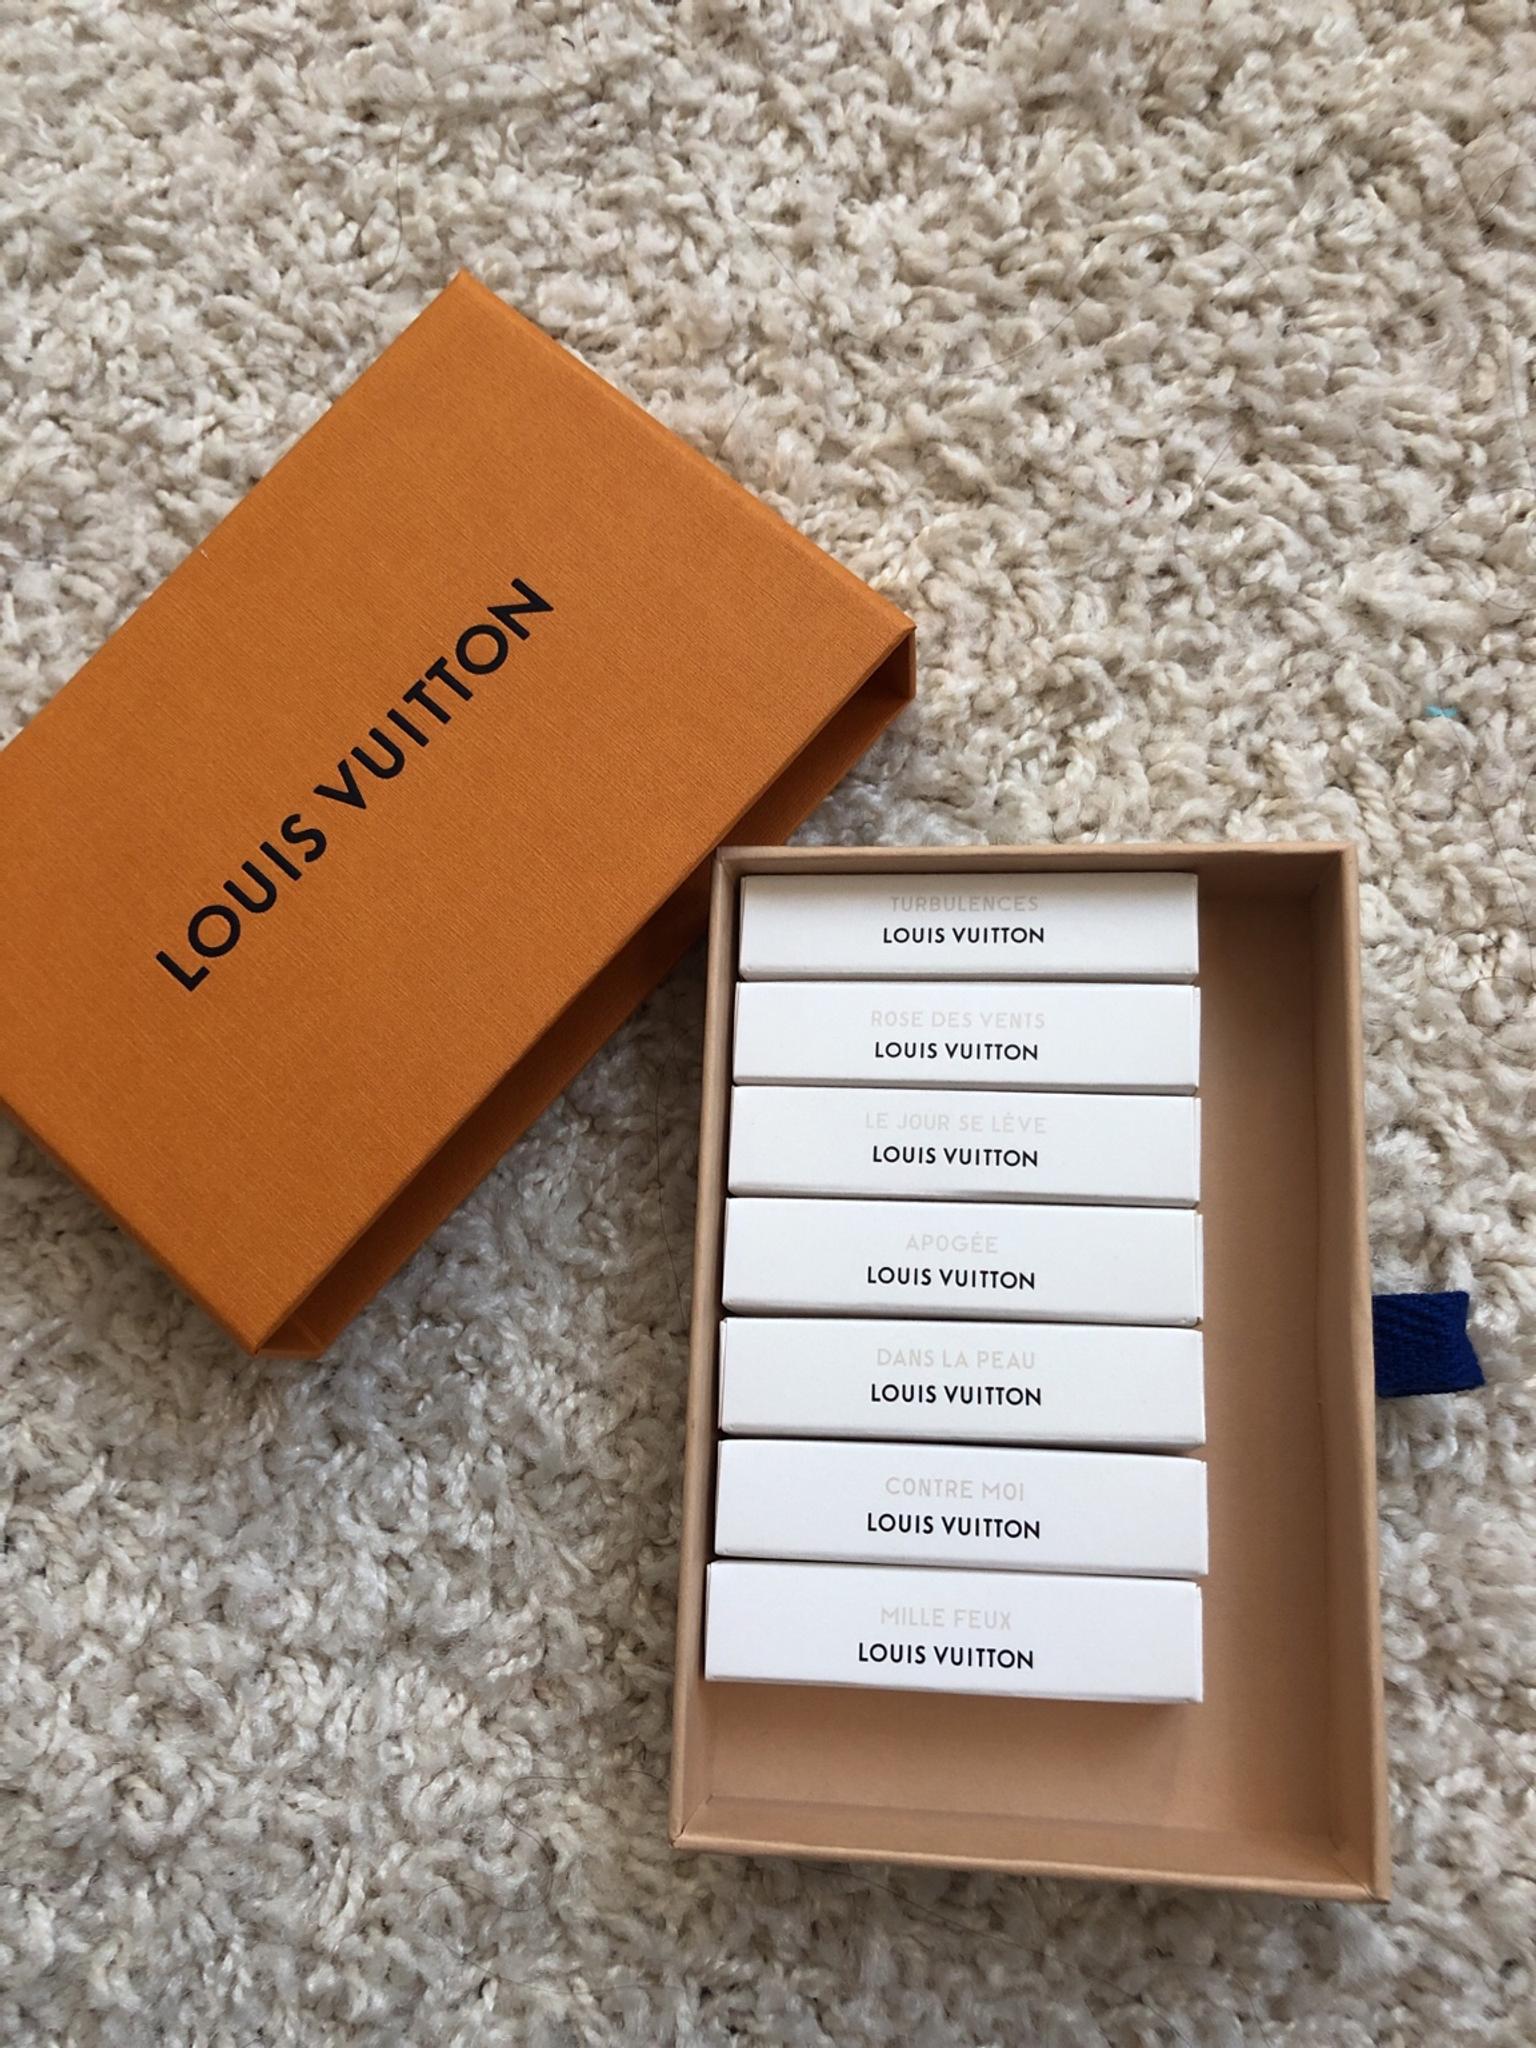 NEW Dapper Louis Vuitton Imagination + Free Fragrances Giveaways 🔥🔥🔥  closed 